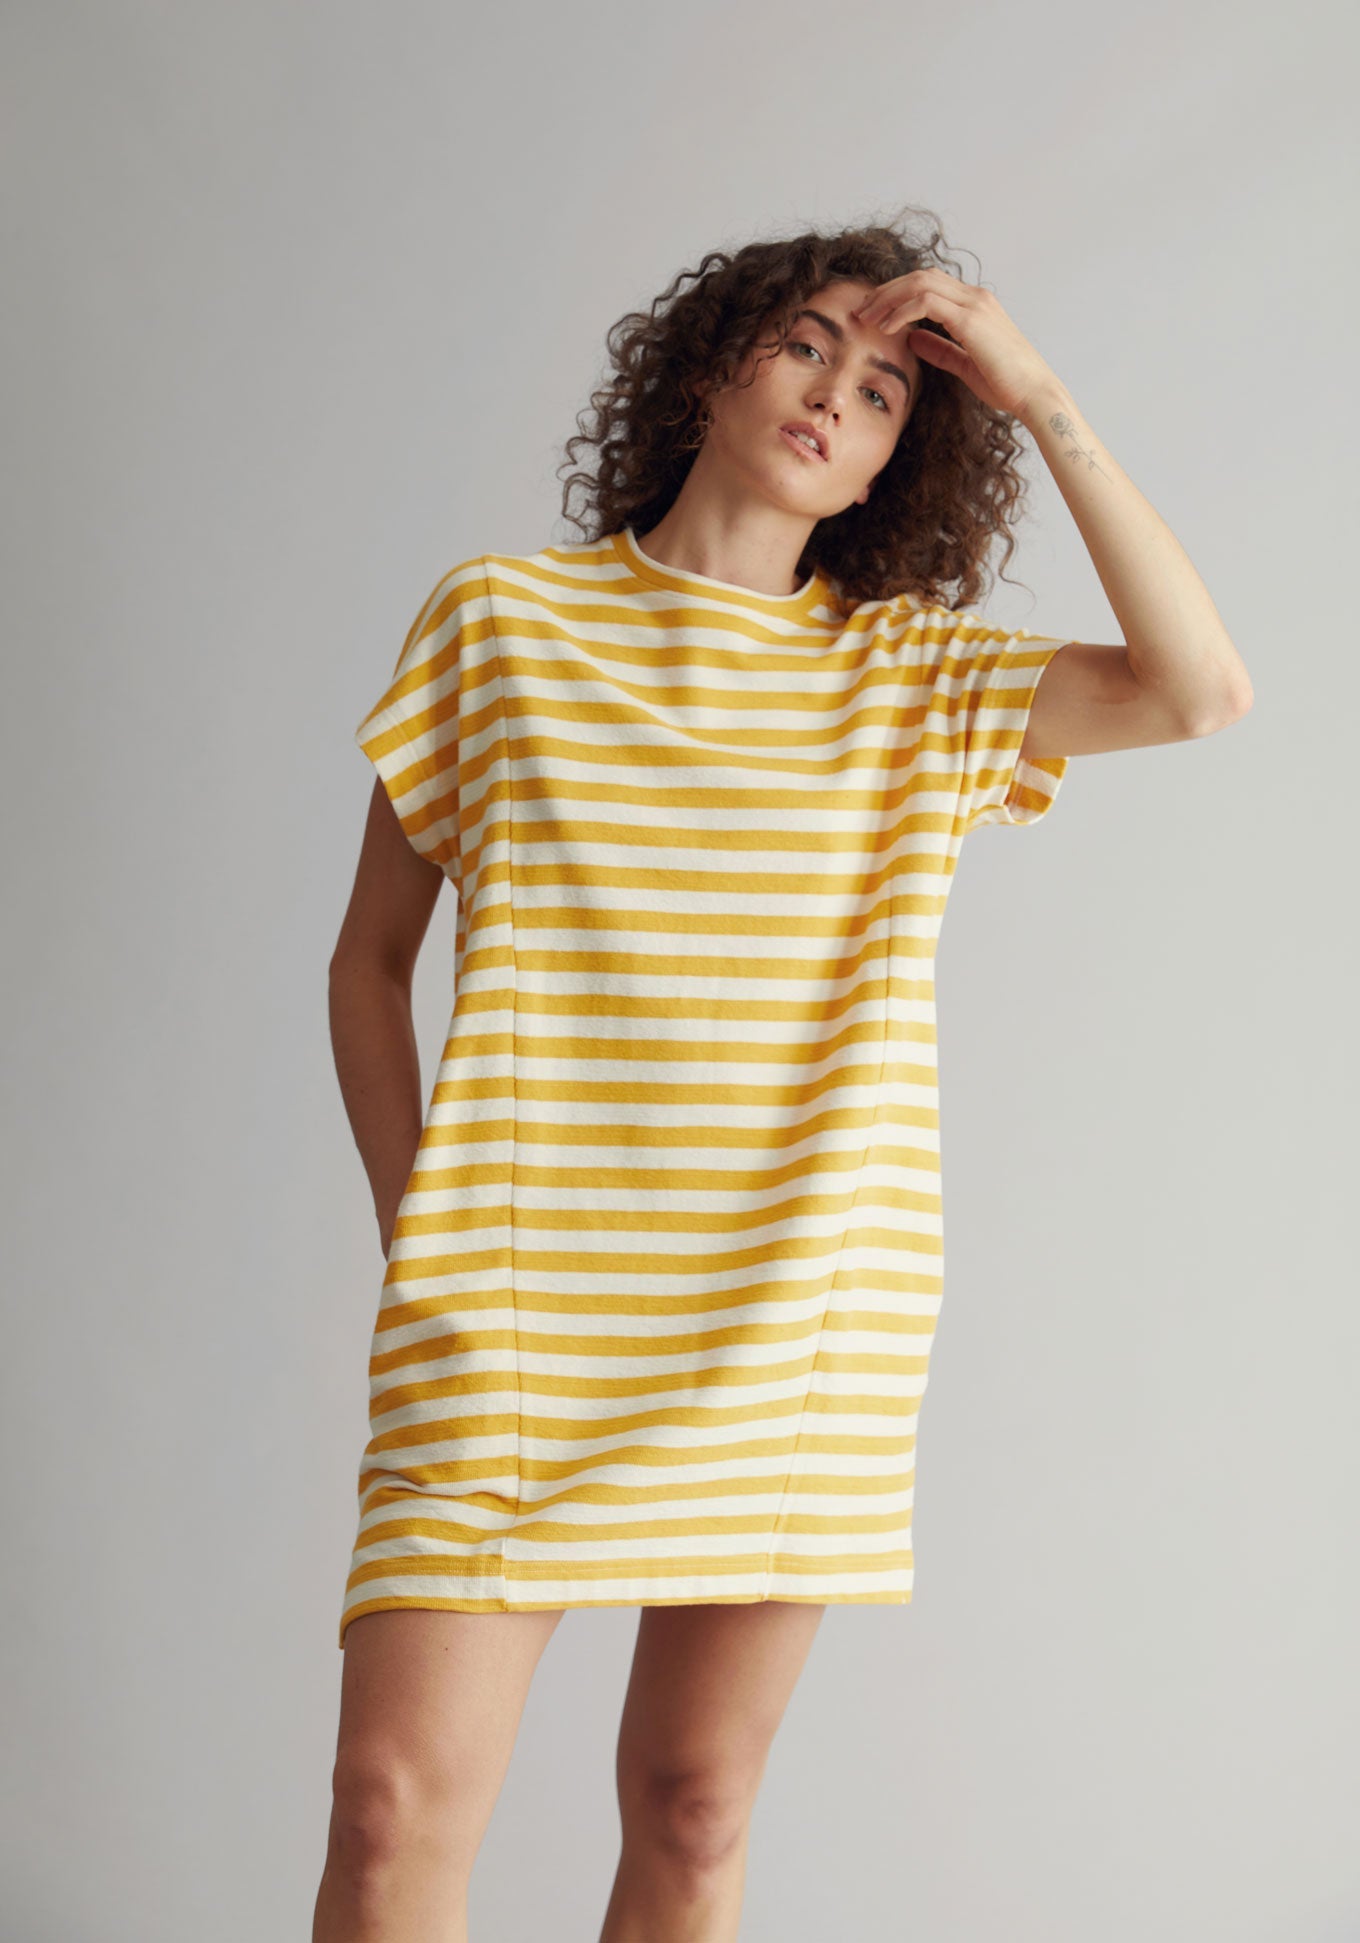 Yellow and white striped, short-sleeved dress YASUKO made of organic cotton by Komodo